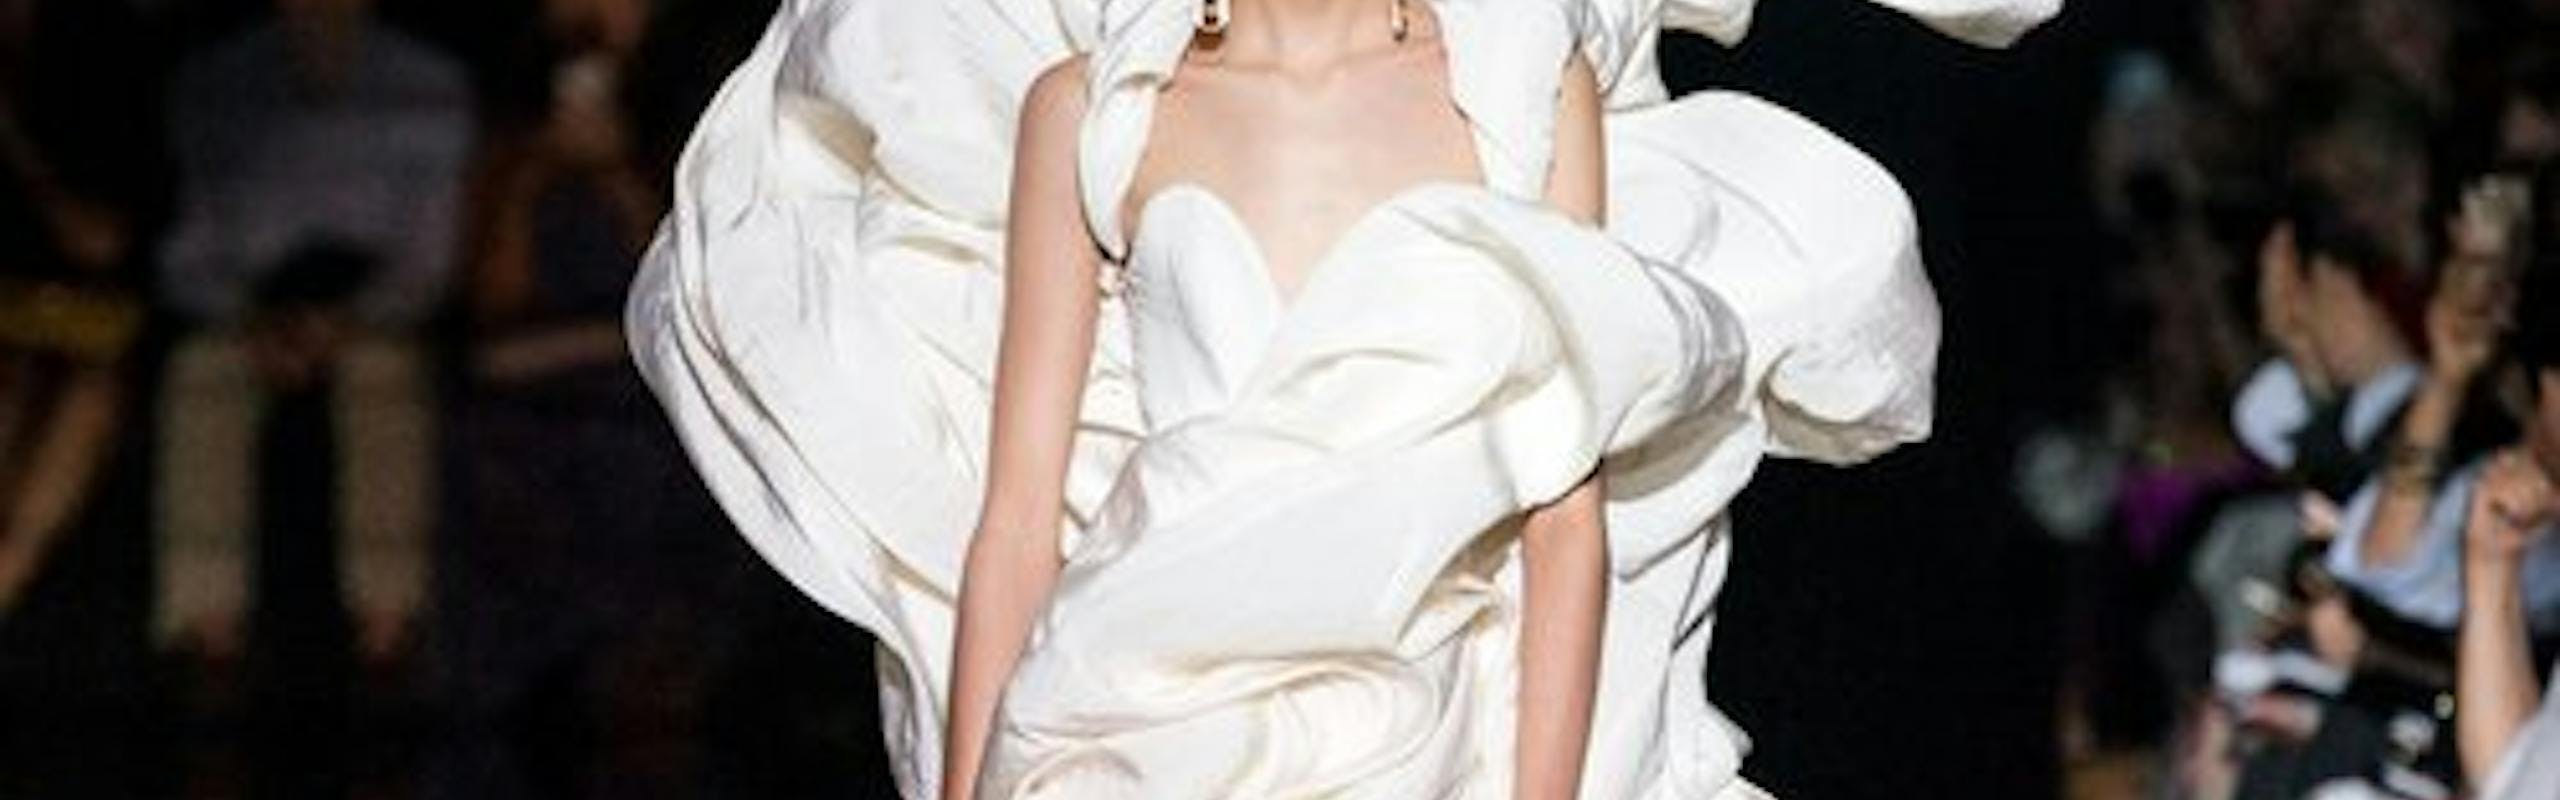 Model walks down black runway in dramatic, poofy, white Schiaparelli wedding dress.